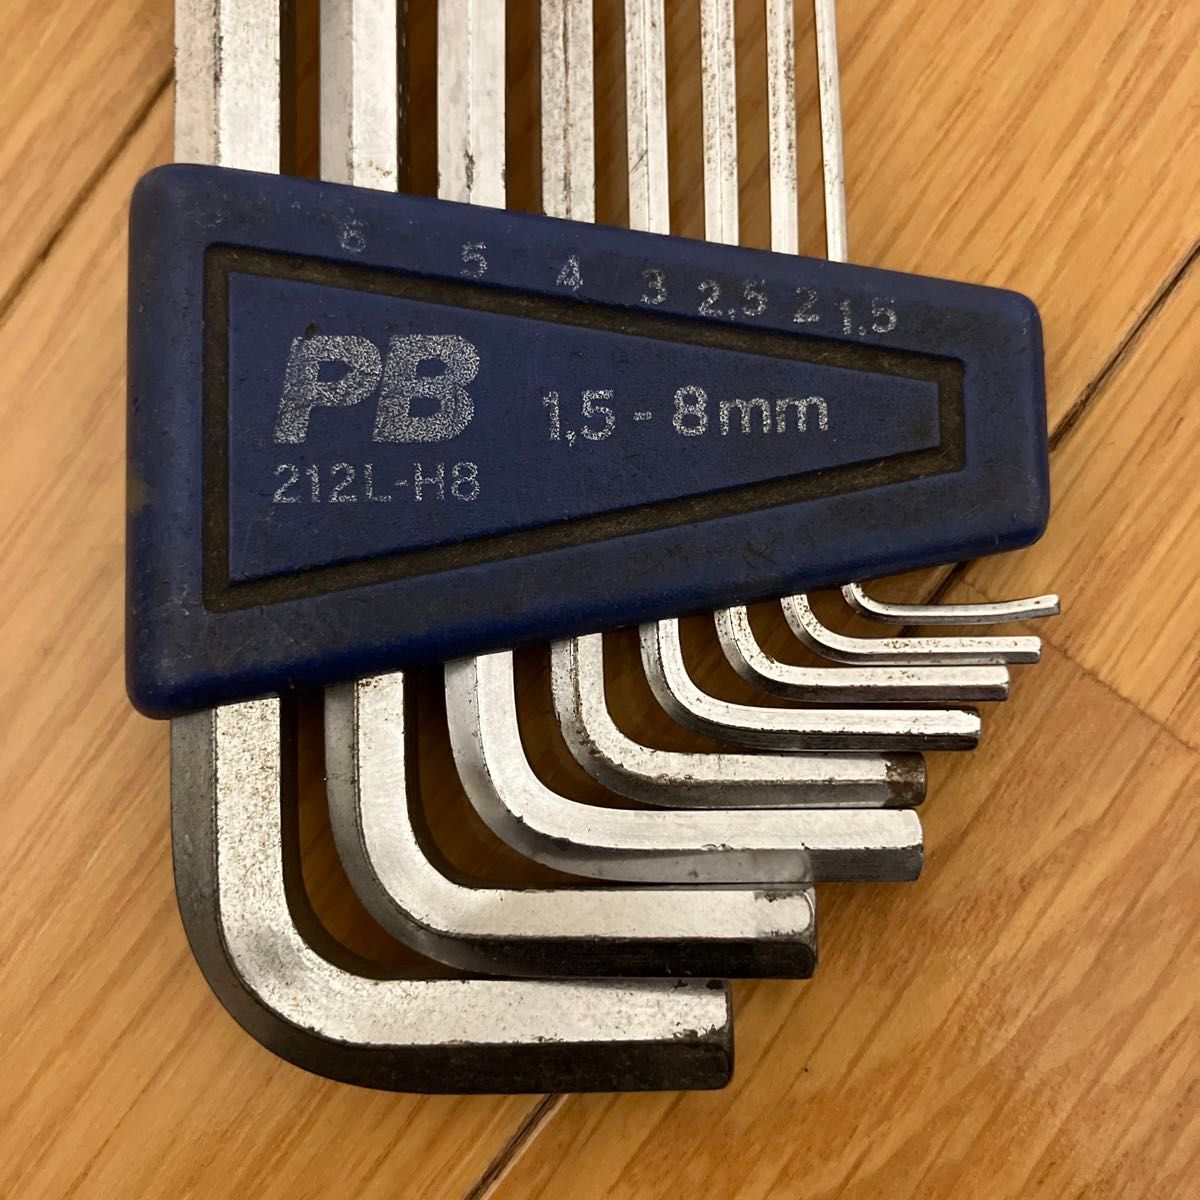 PB  六角レンチ　PB 212L-H8  1.5-8mm